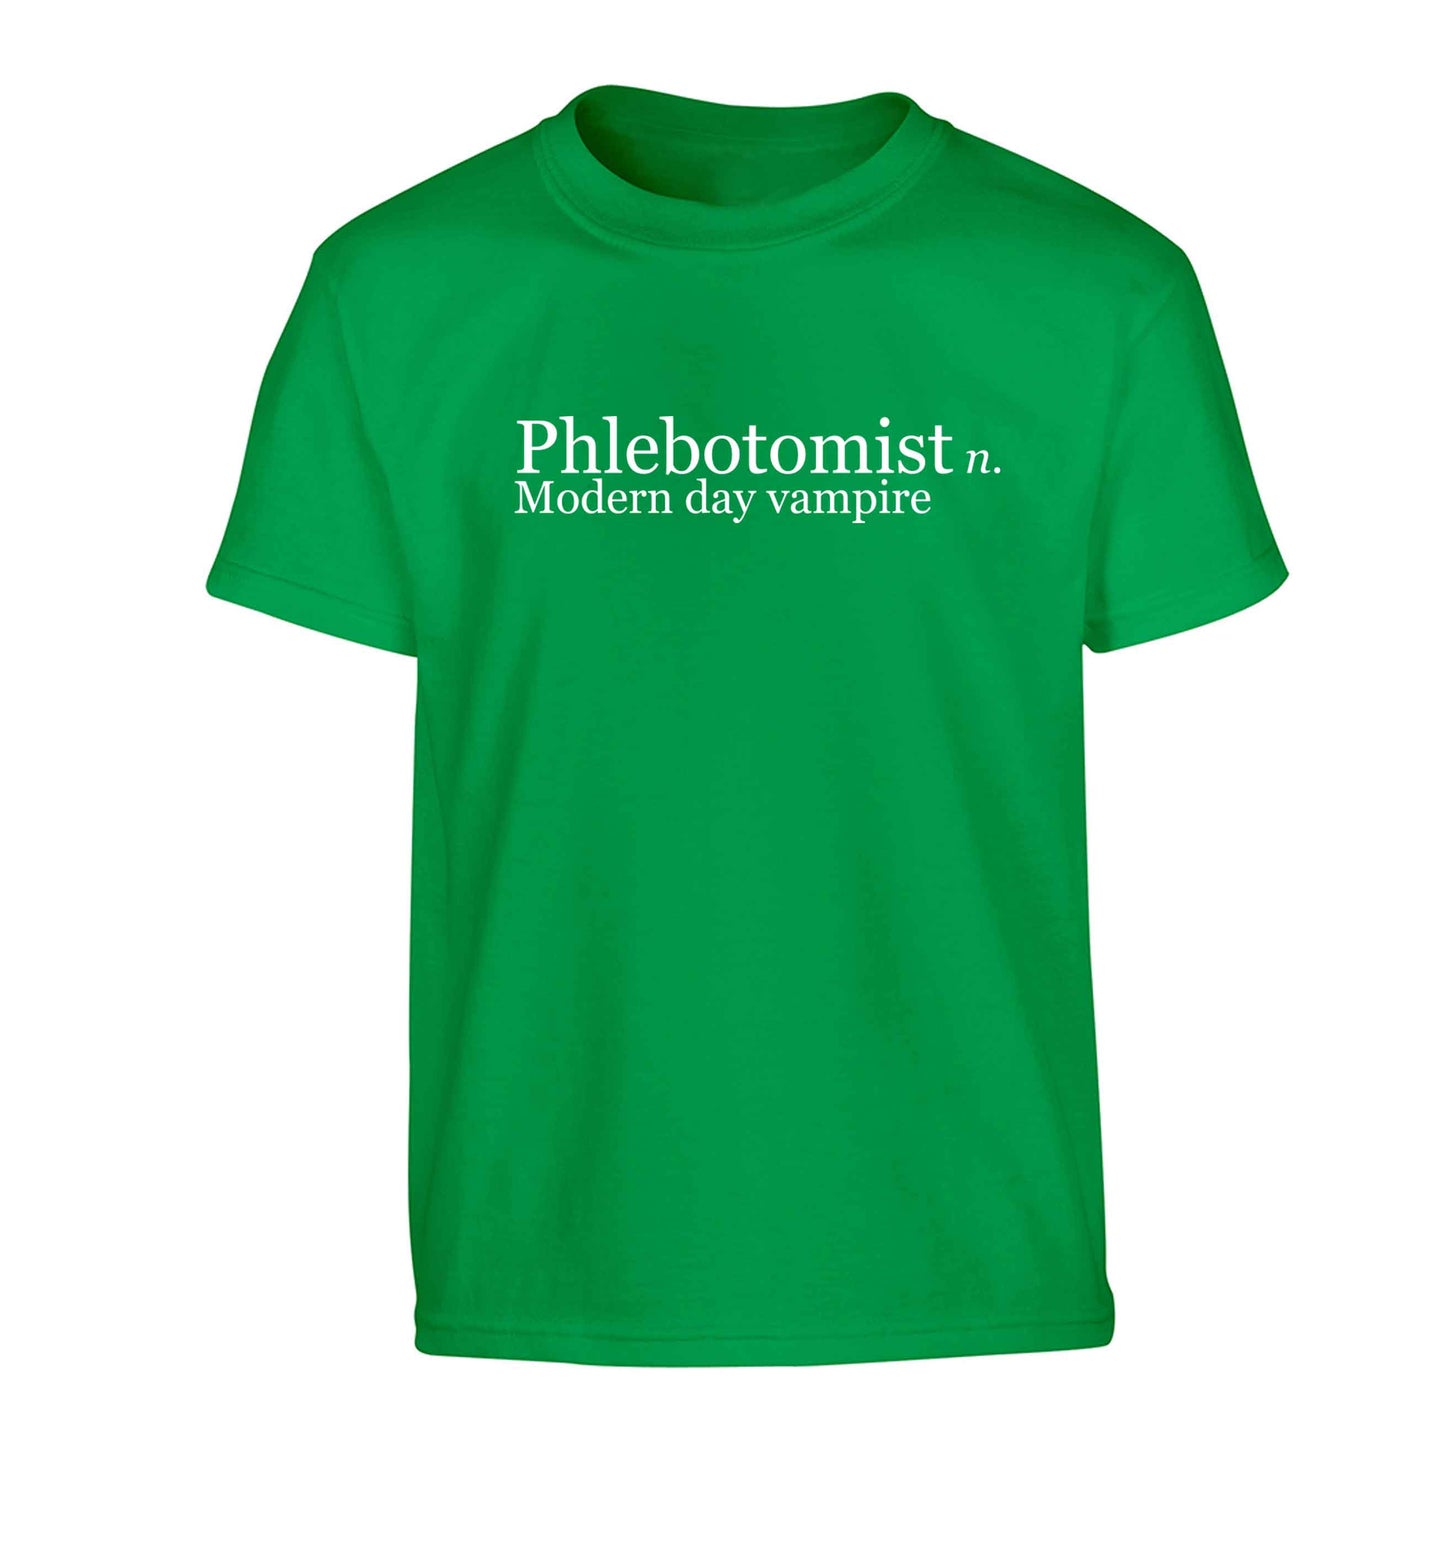 Phlebotomist - Modern day vampire Children's green Tshirt 12-13 Years